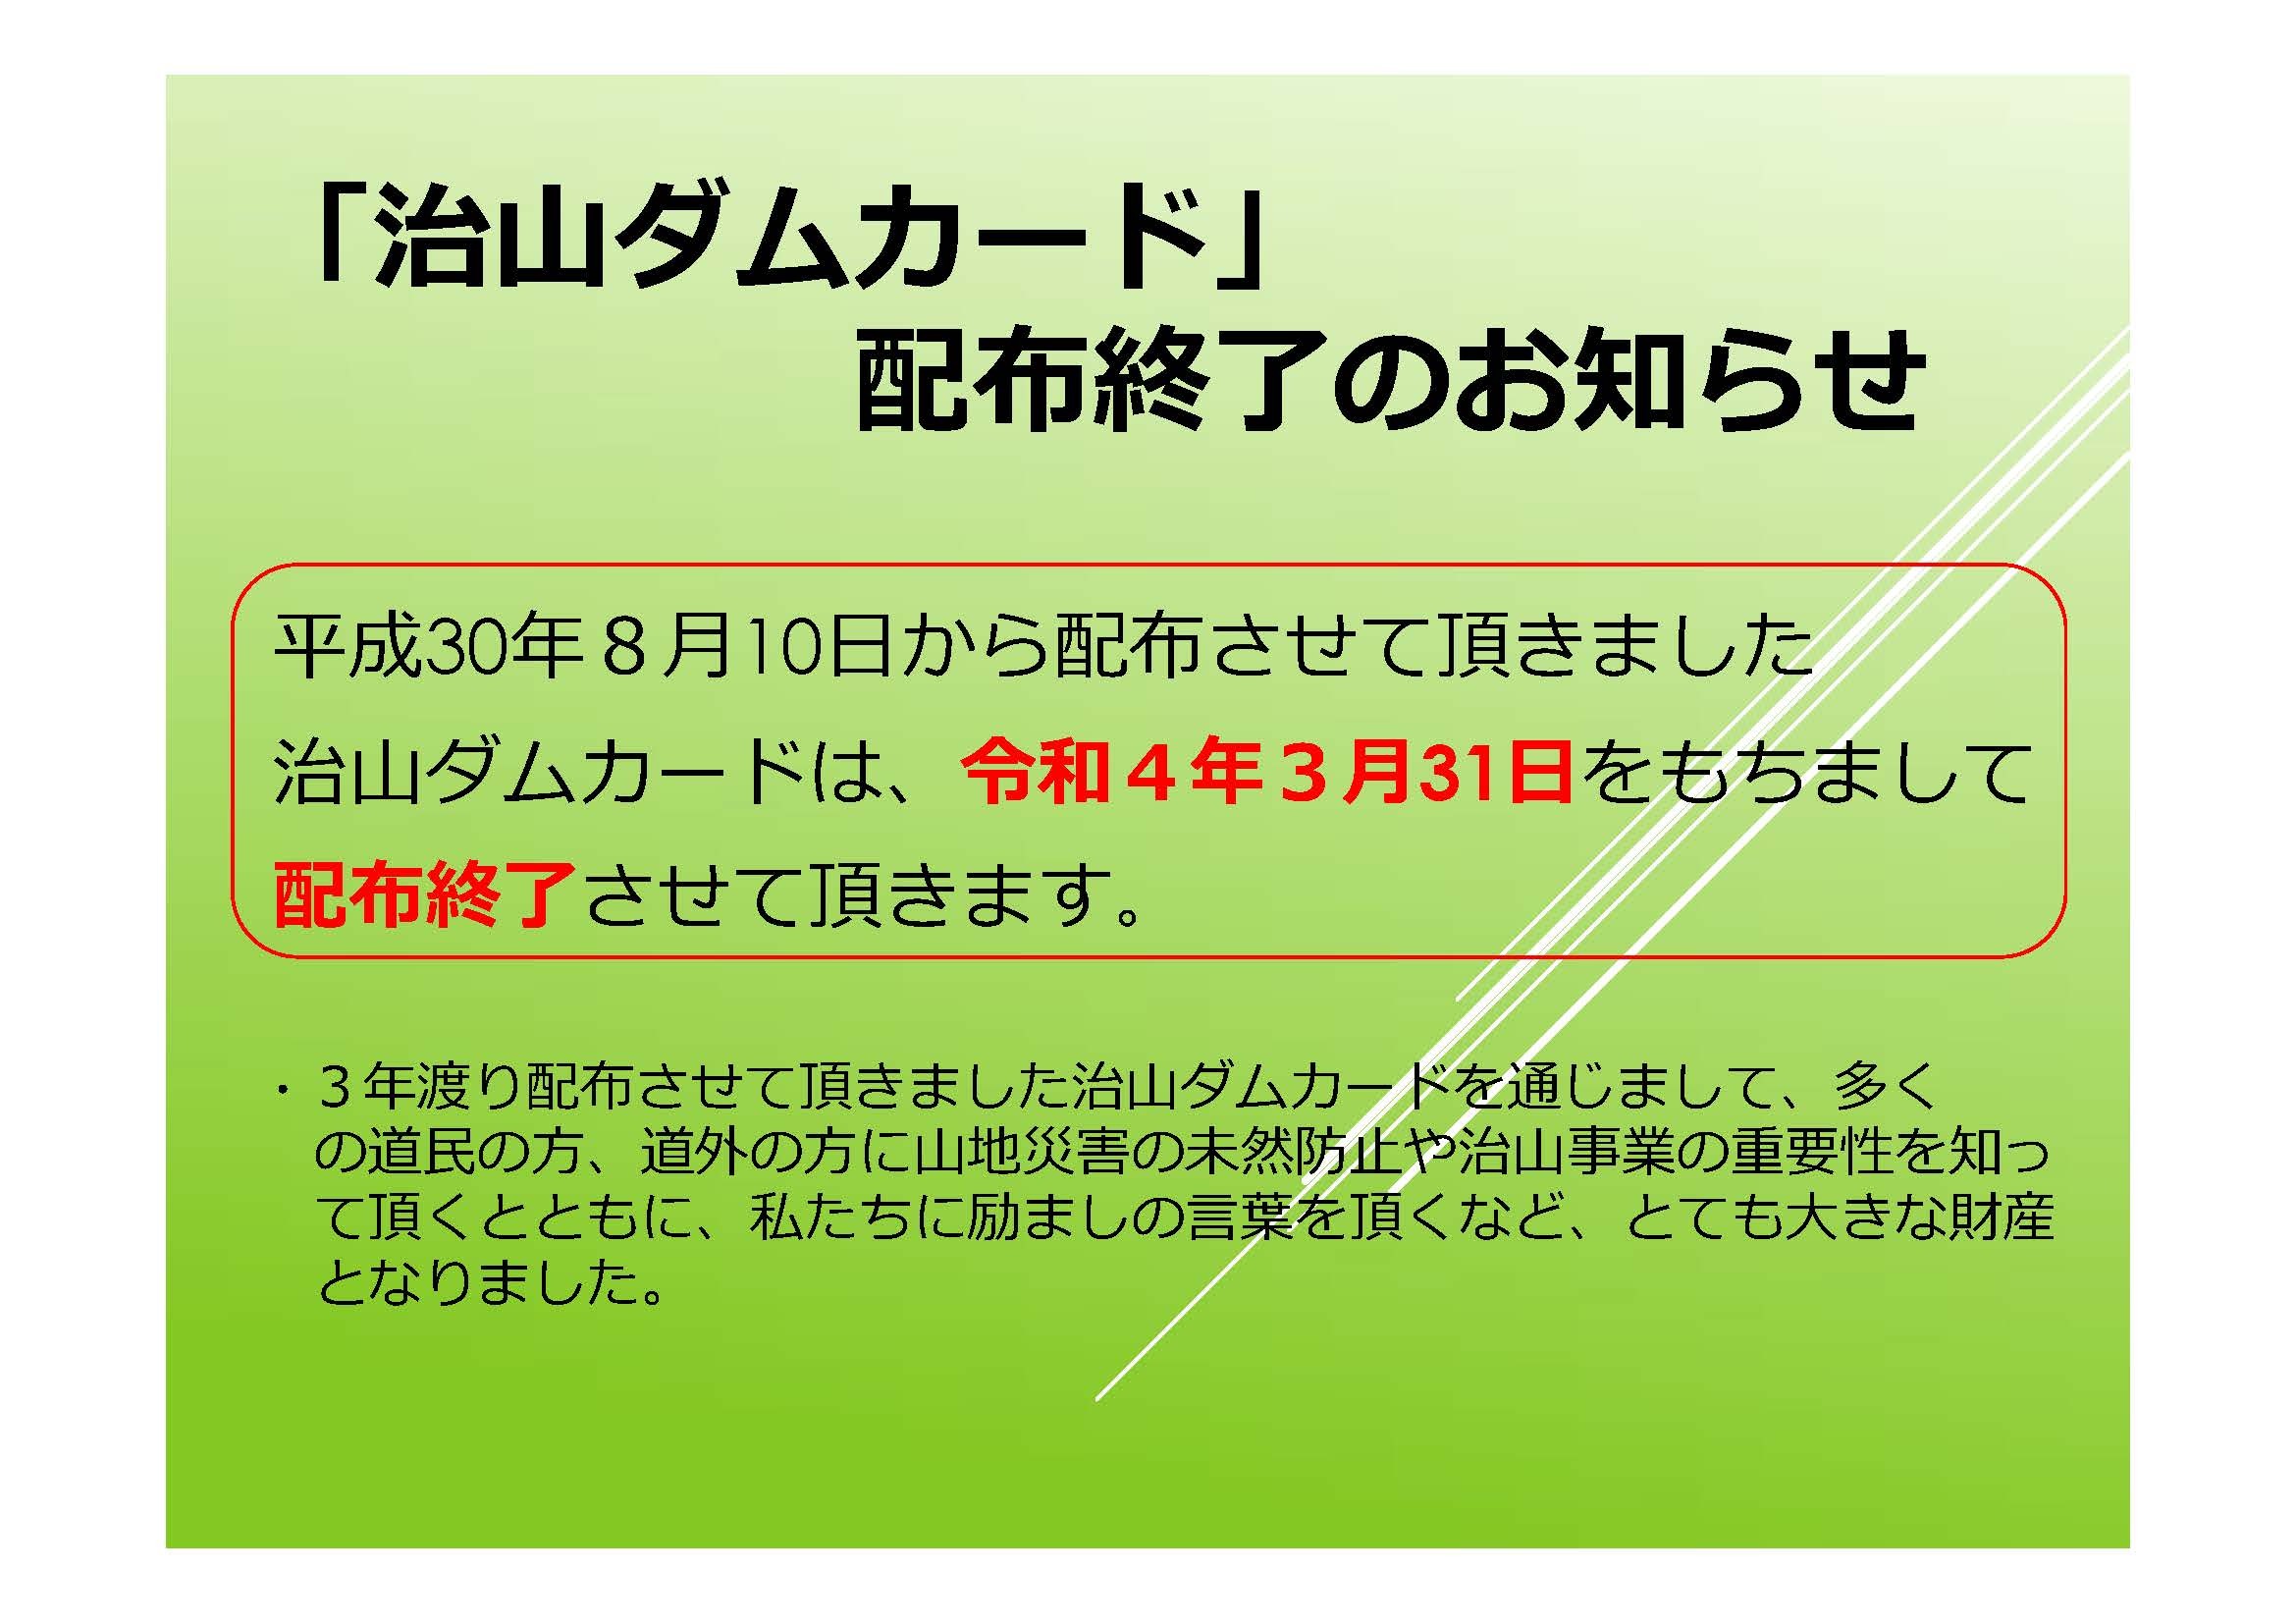 03-3 【HP掲載用】「治山ダムカード」配布終了のお知らせ (JPG 355KB)